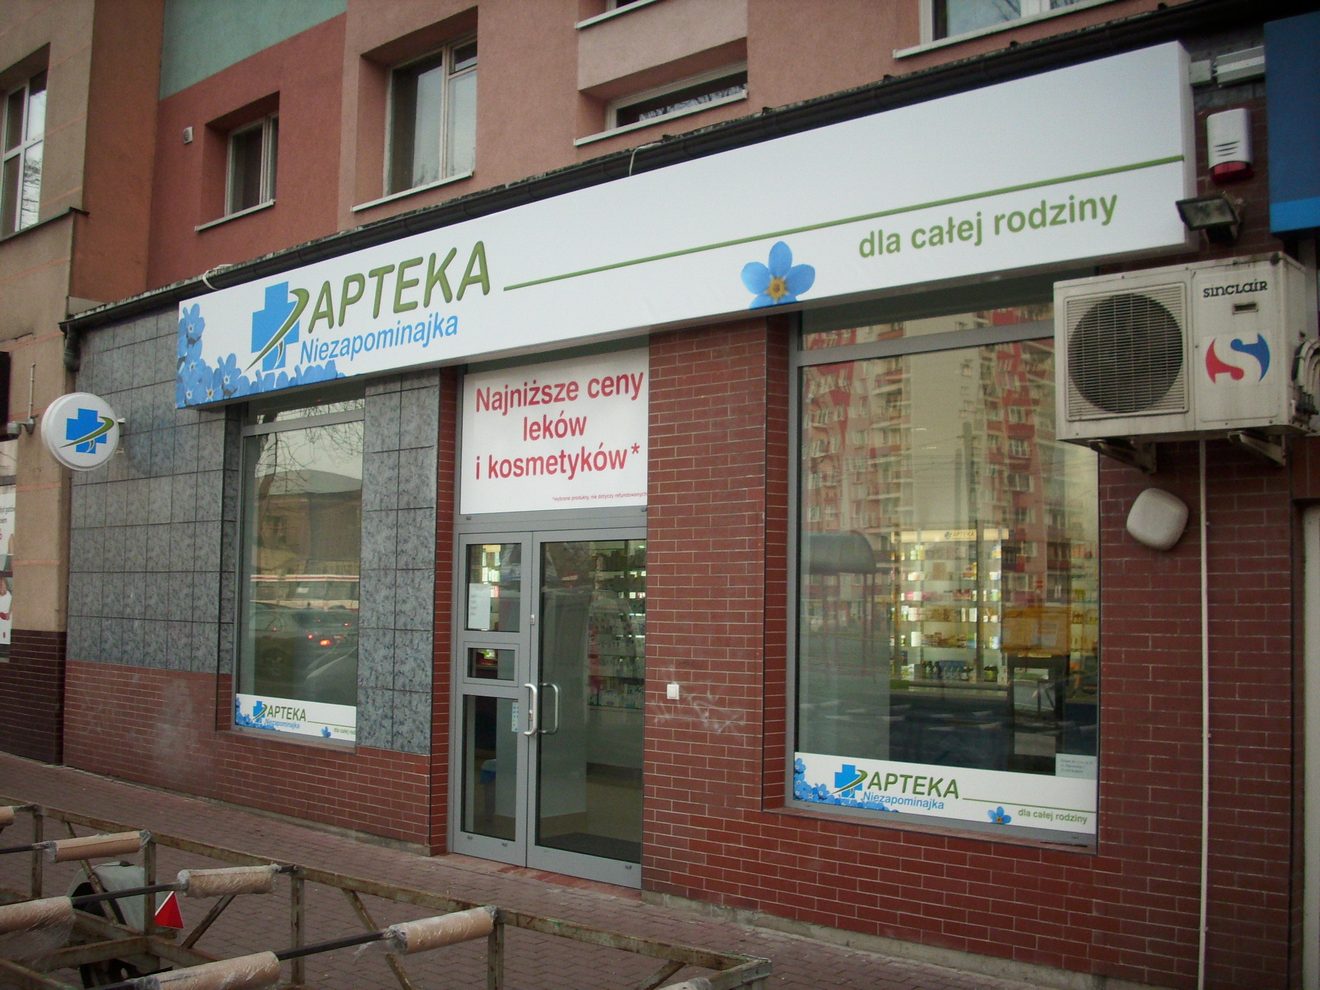 advertising panel and semaphore - Niezapominajka pharmacy